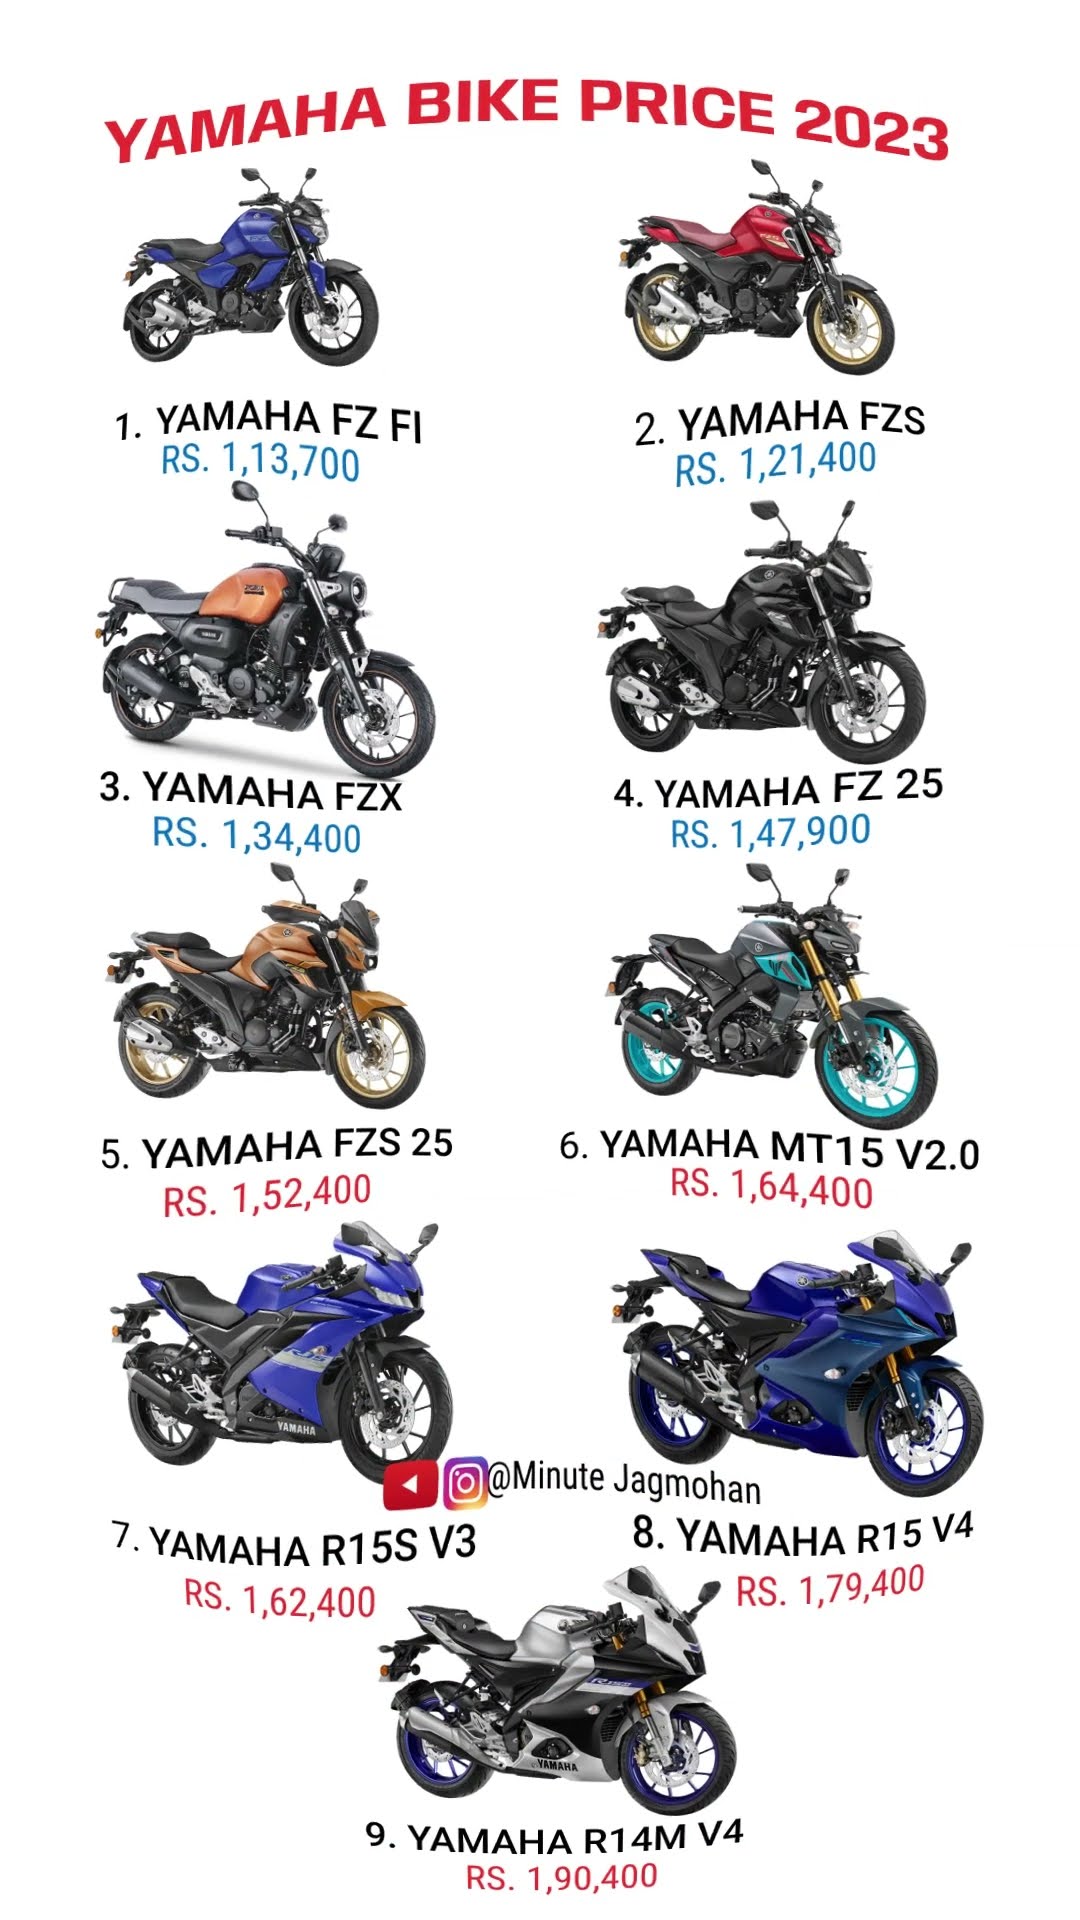 technical characteristics of Yamaha motorcycles